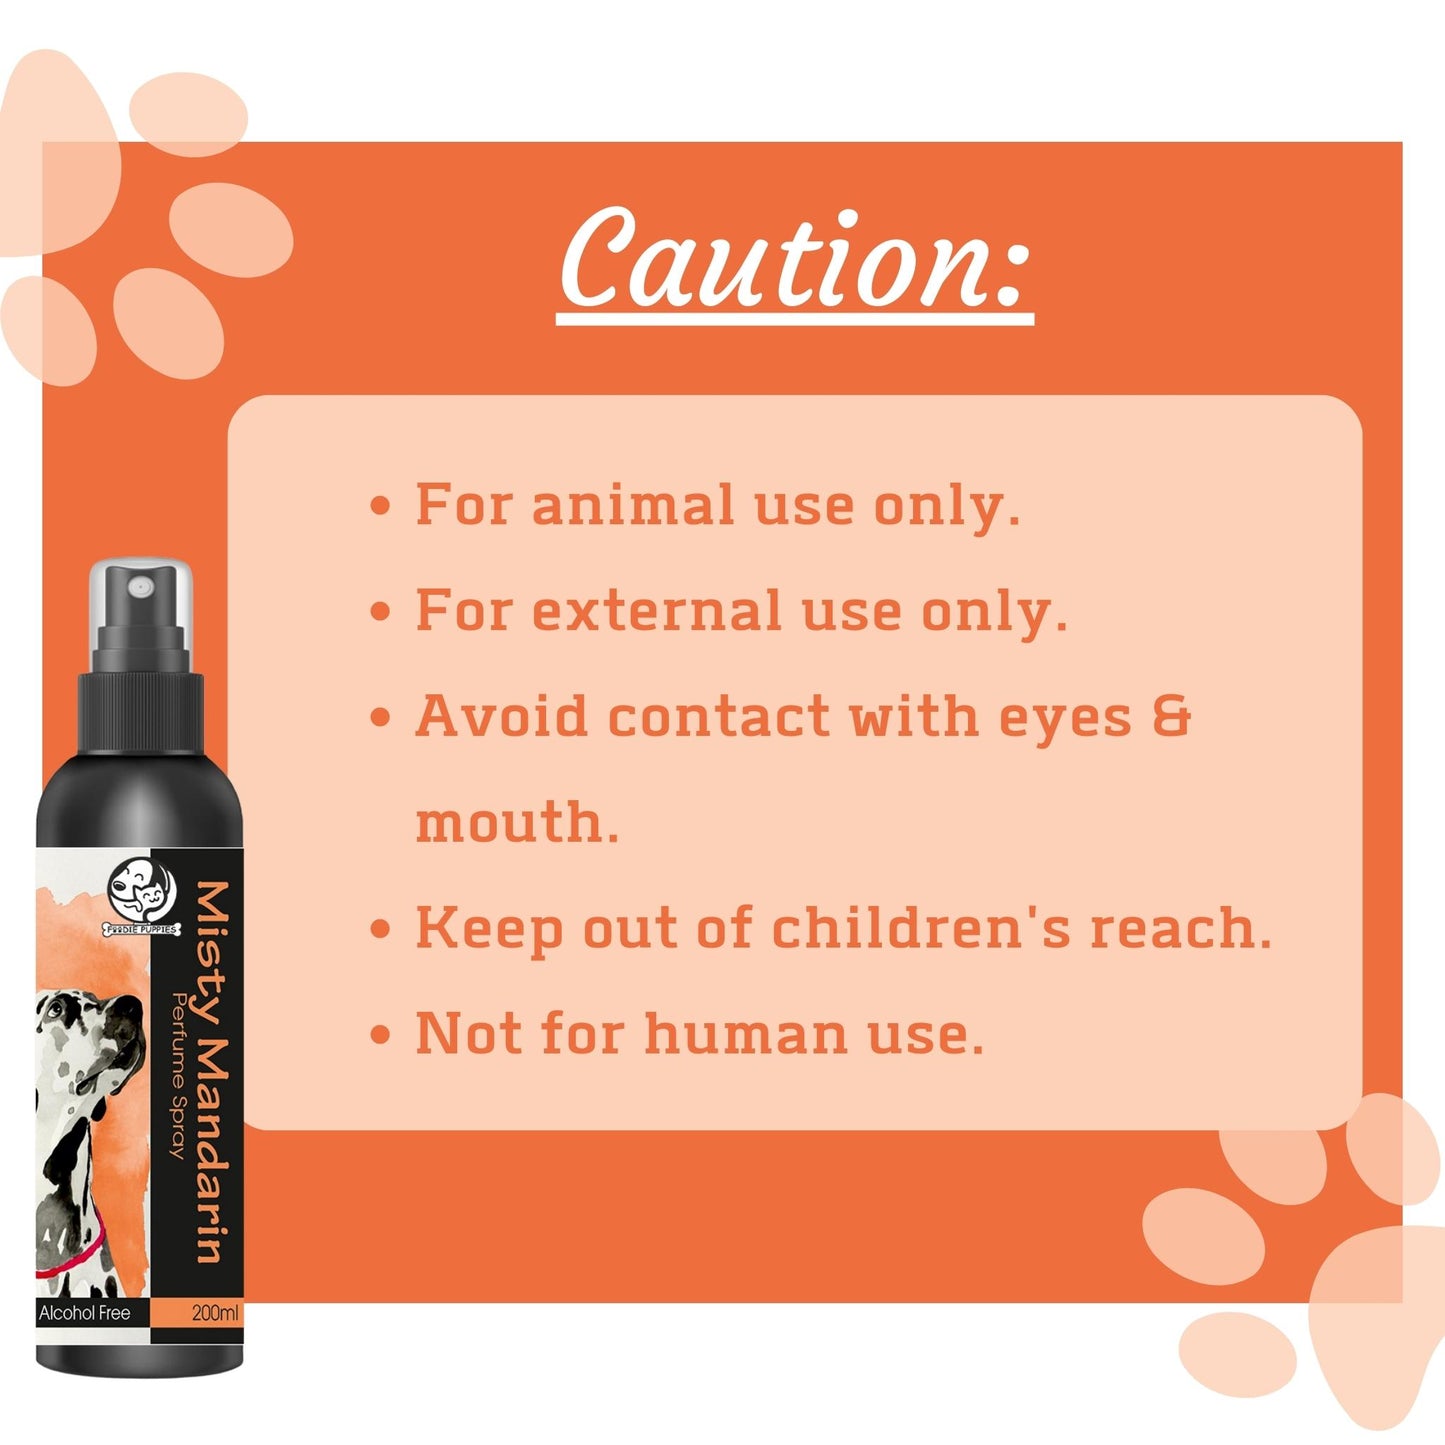 Foodie Puppies Pet Perfume Spray Misty Mandarin for Dogs - 200 ml